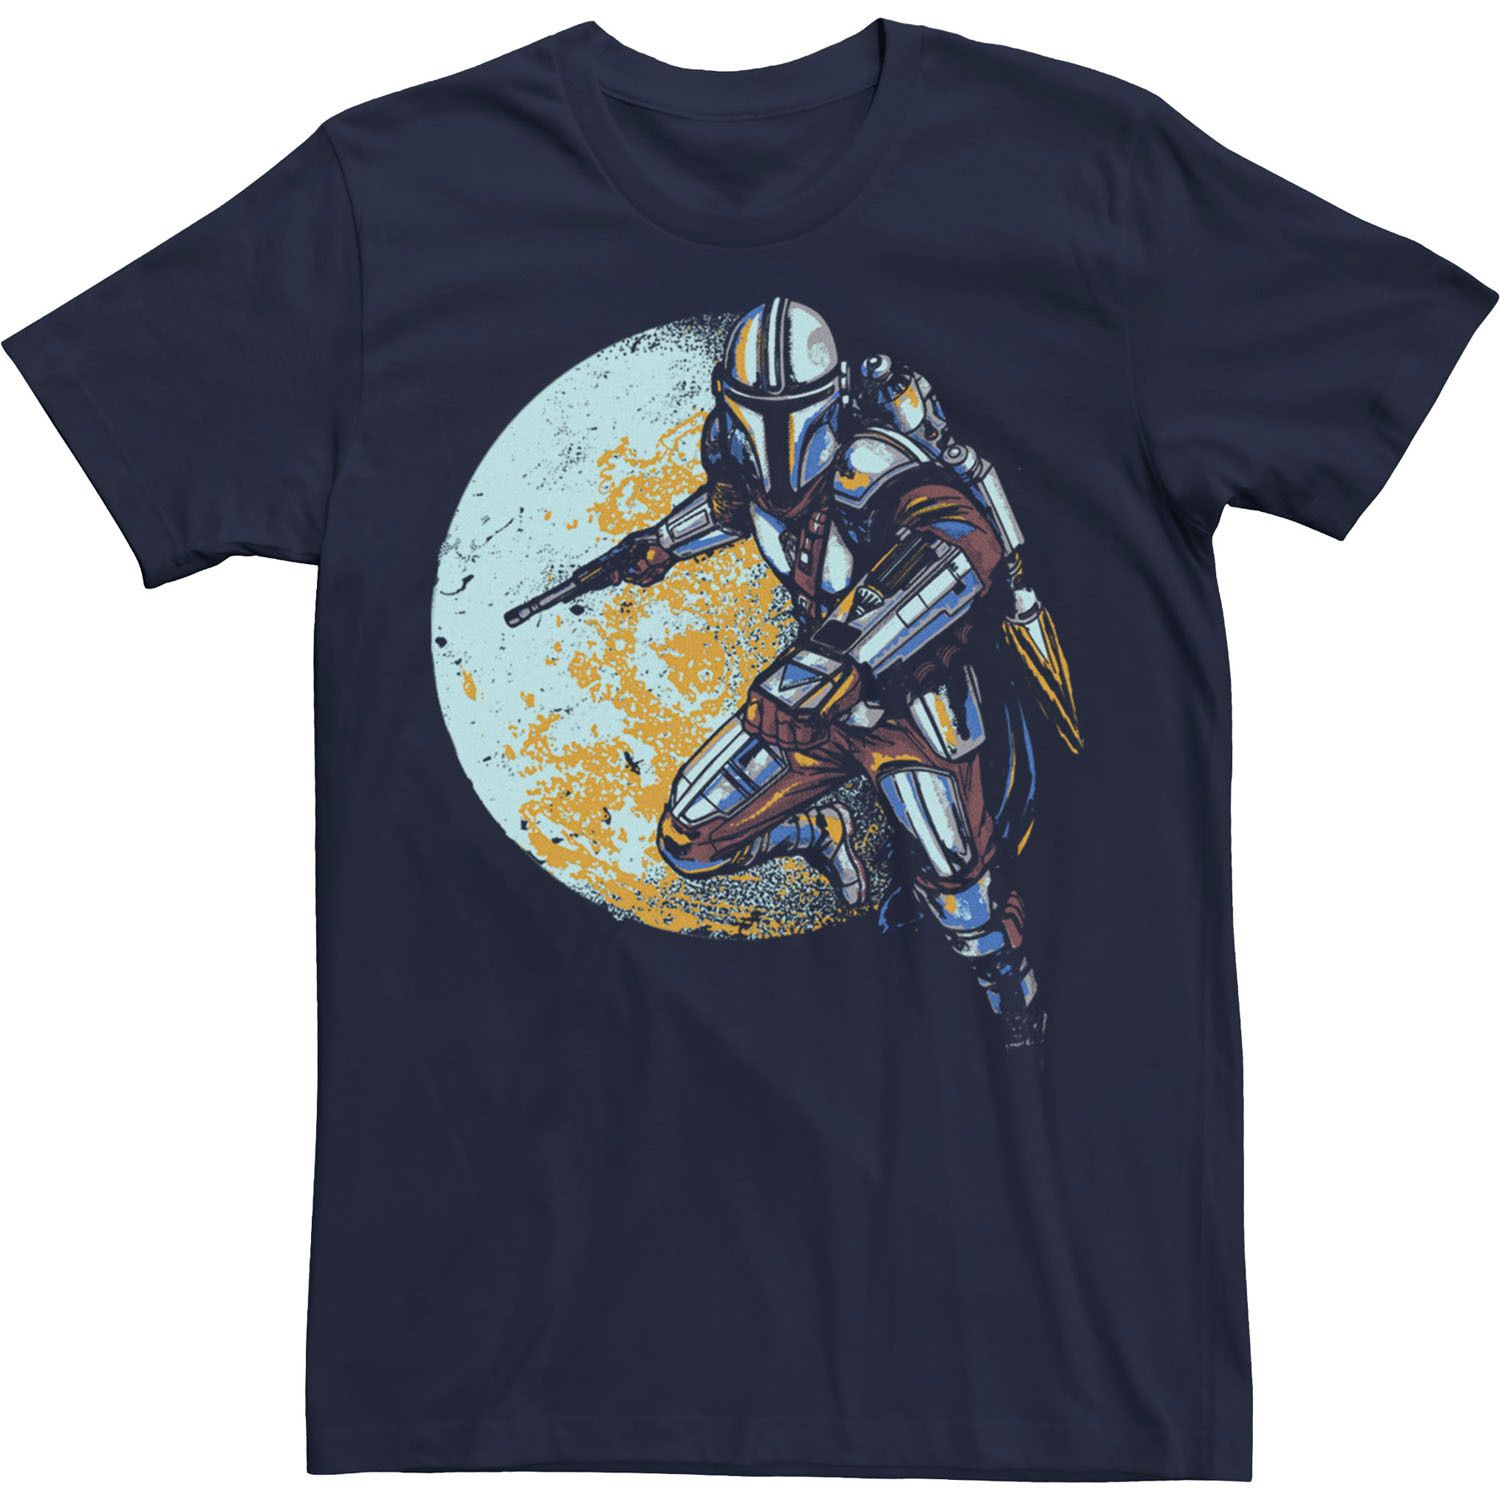 Мужская футболка с плакатом «Звездные войны: Мандалорец Мундо Лориан» Licensed Character